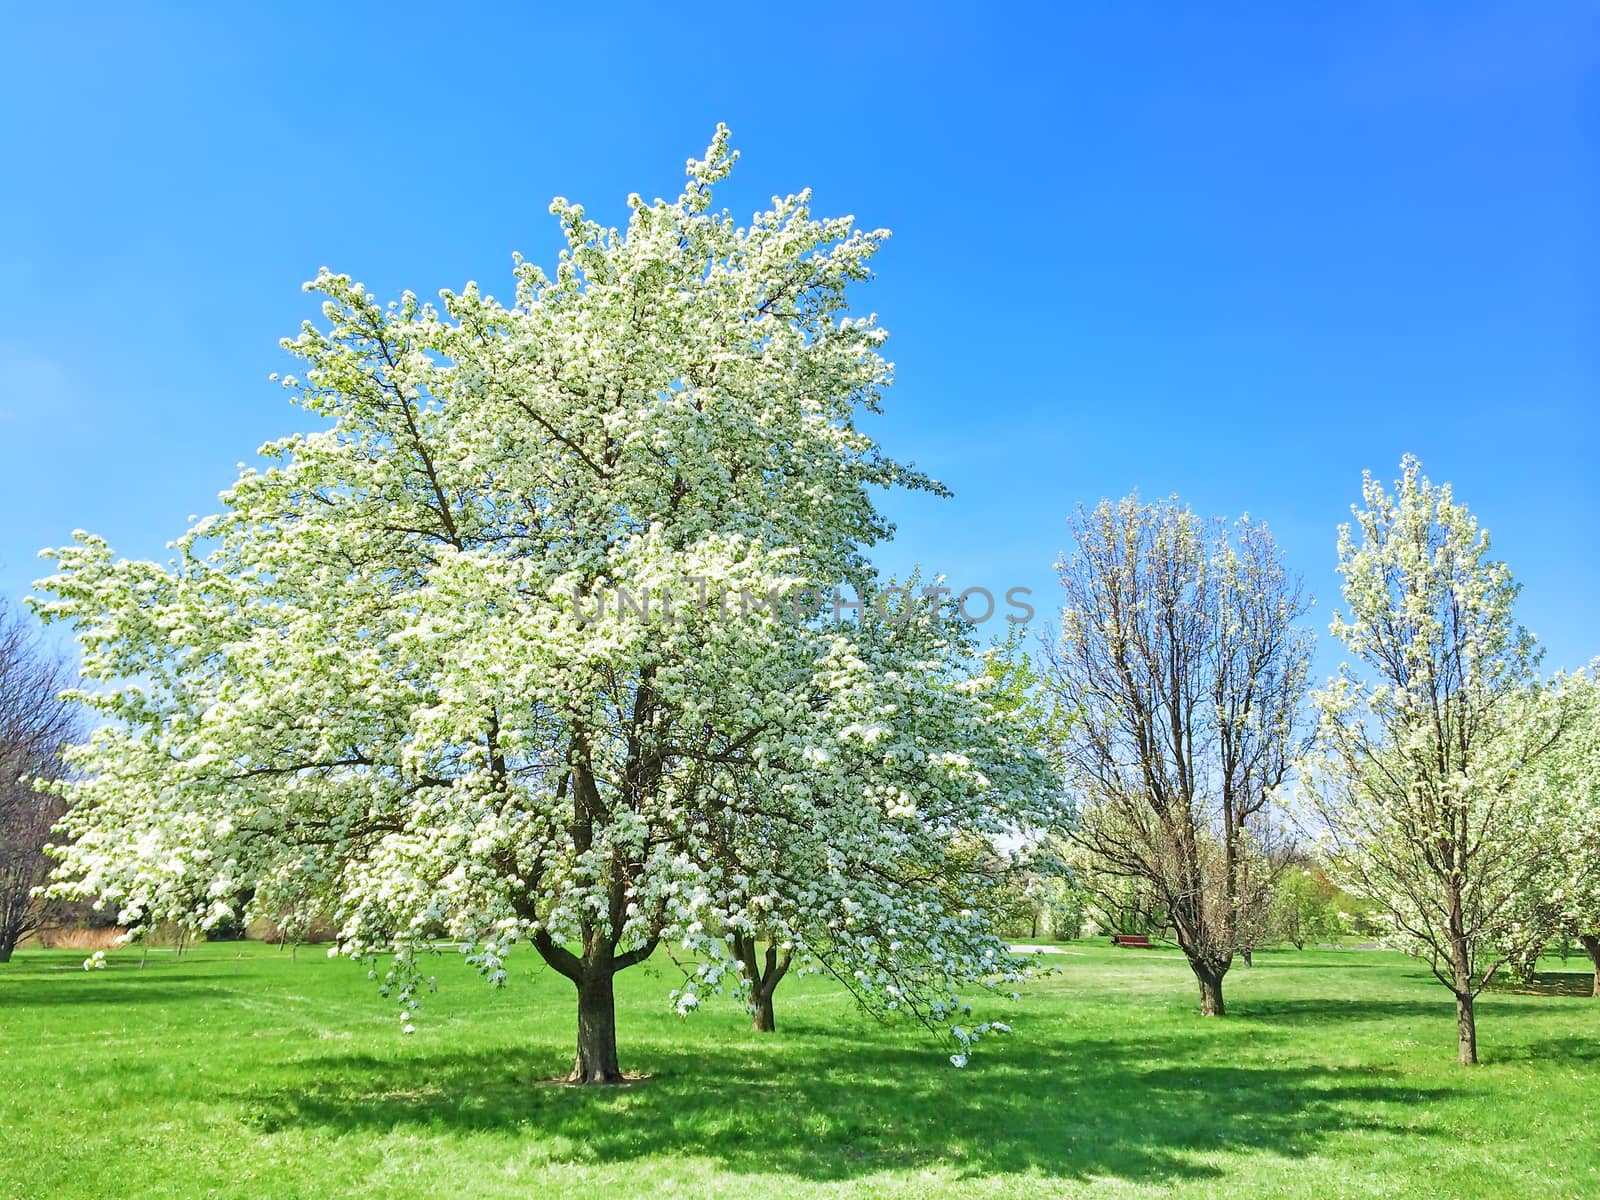 Beautiful blooming tree in spring garden by anikasalsera